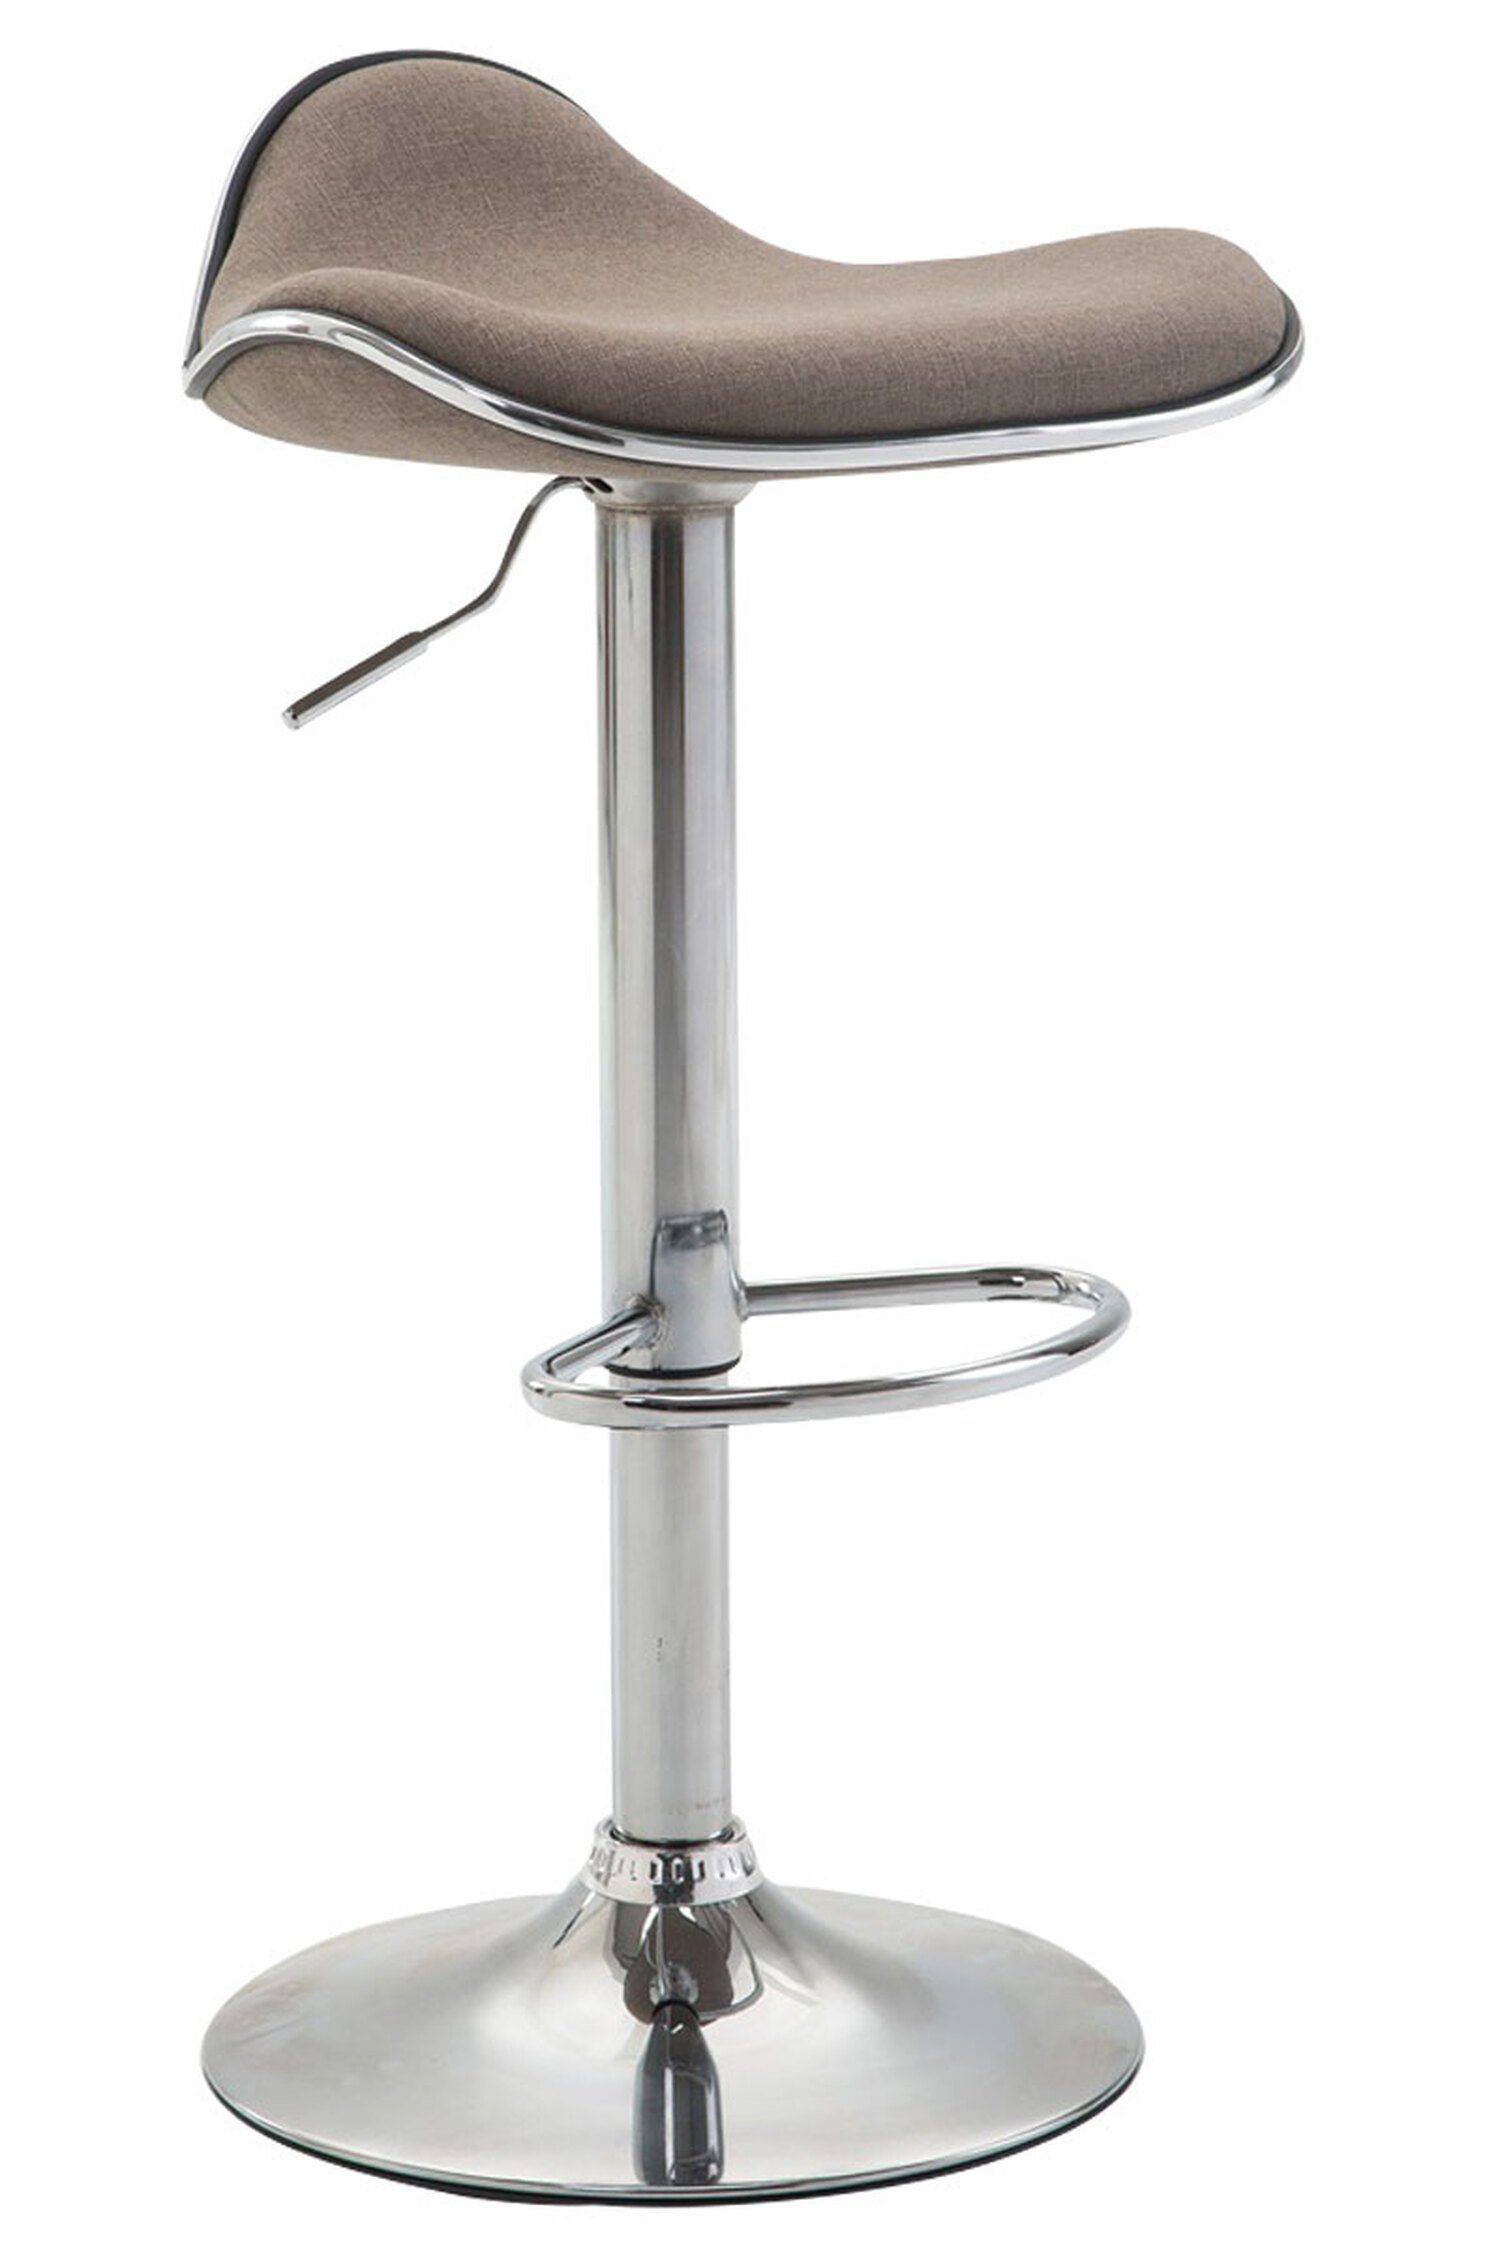 TPFLiving Barhocker Shangrila (Barstuhl höhenverstellbar - Hocker für Theke & Küche - Tresenhocker), 360° drehbar - chromfarbener Stahl - Sitzfläche: Stoff Taupe